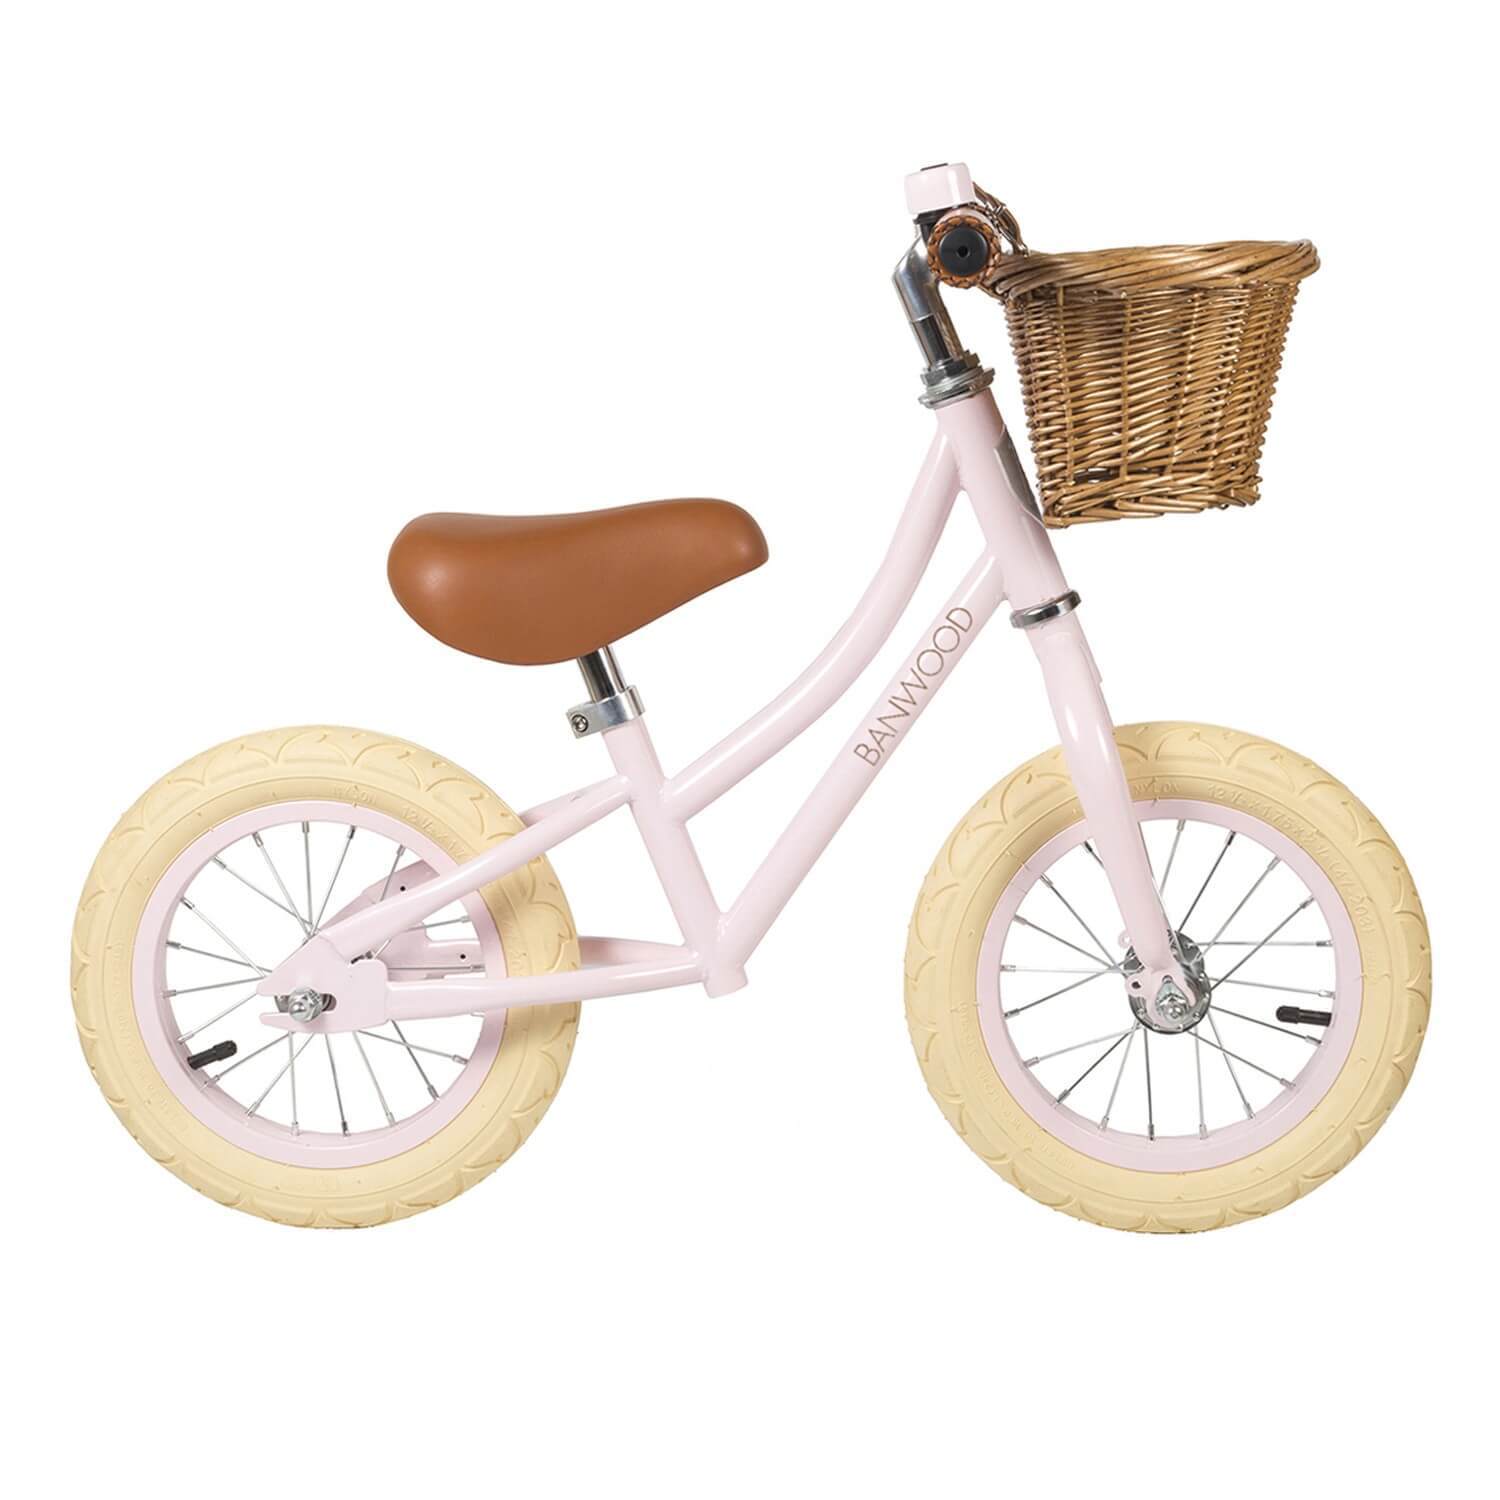 Banwood First Go Kids Balance Bike - Pink PRE-SALE